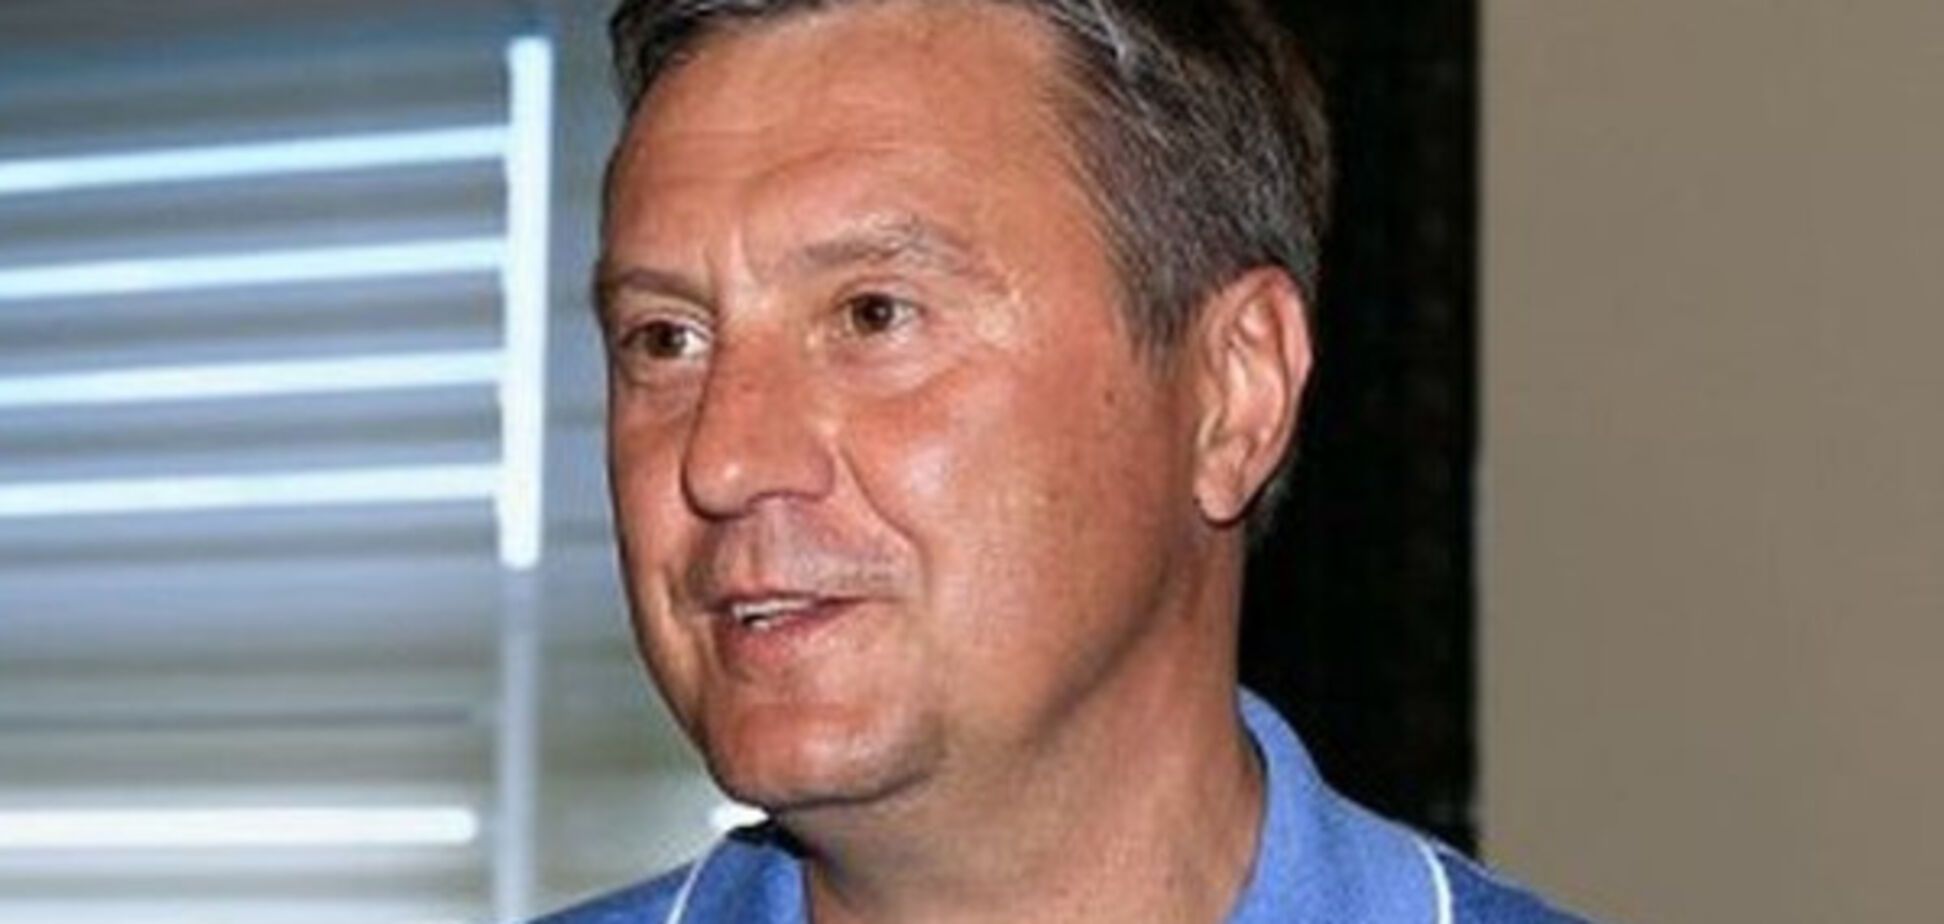 Олександр Хацкевич